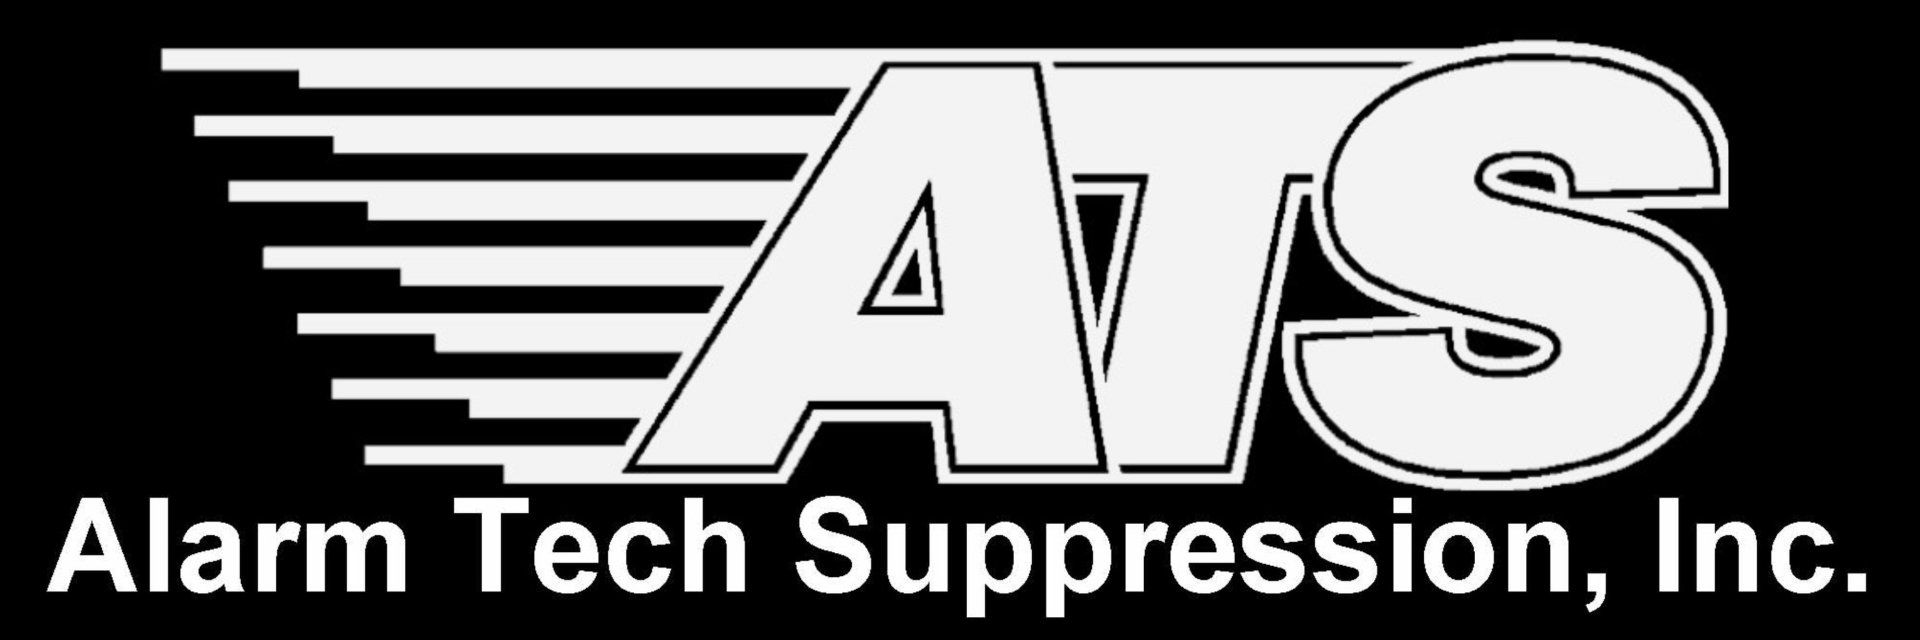 Alarm Tech Suppression - Logo